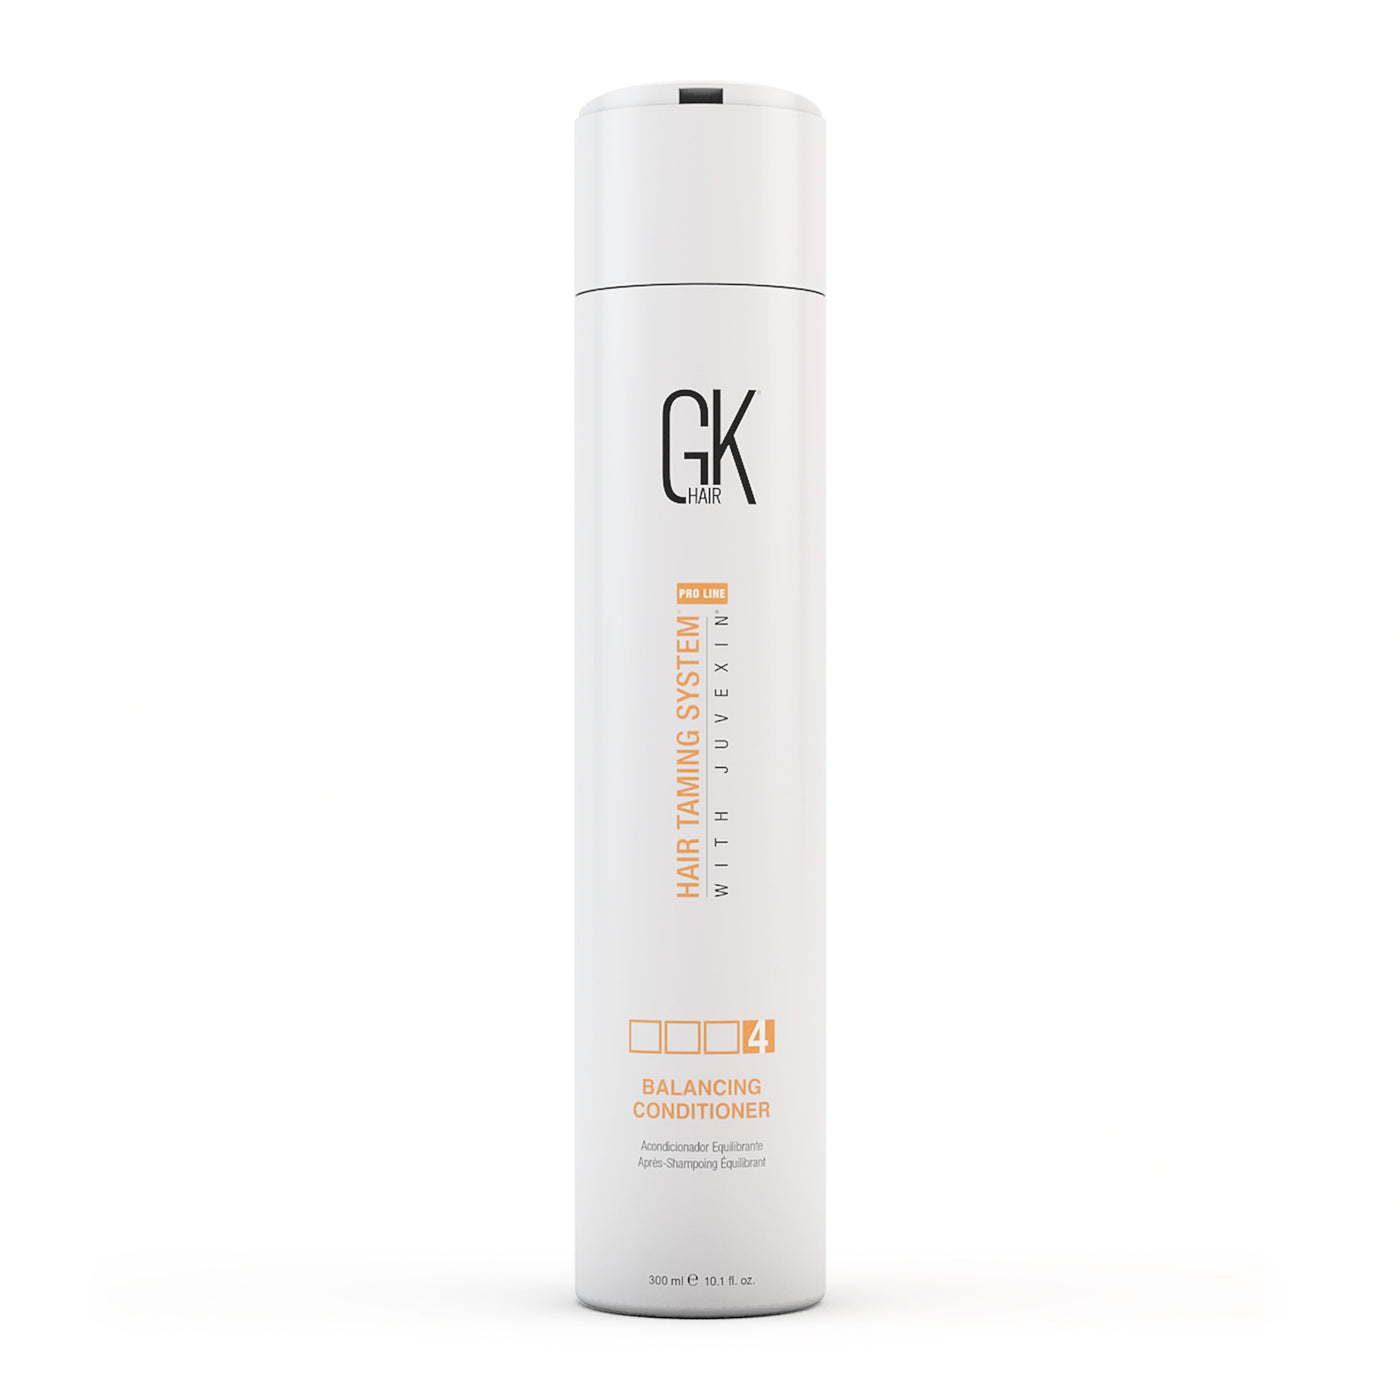 GK Hair Balancing Shampoo and Conditioner 300ml - Buy Oily hair Shampoo